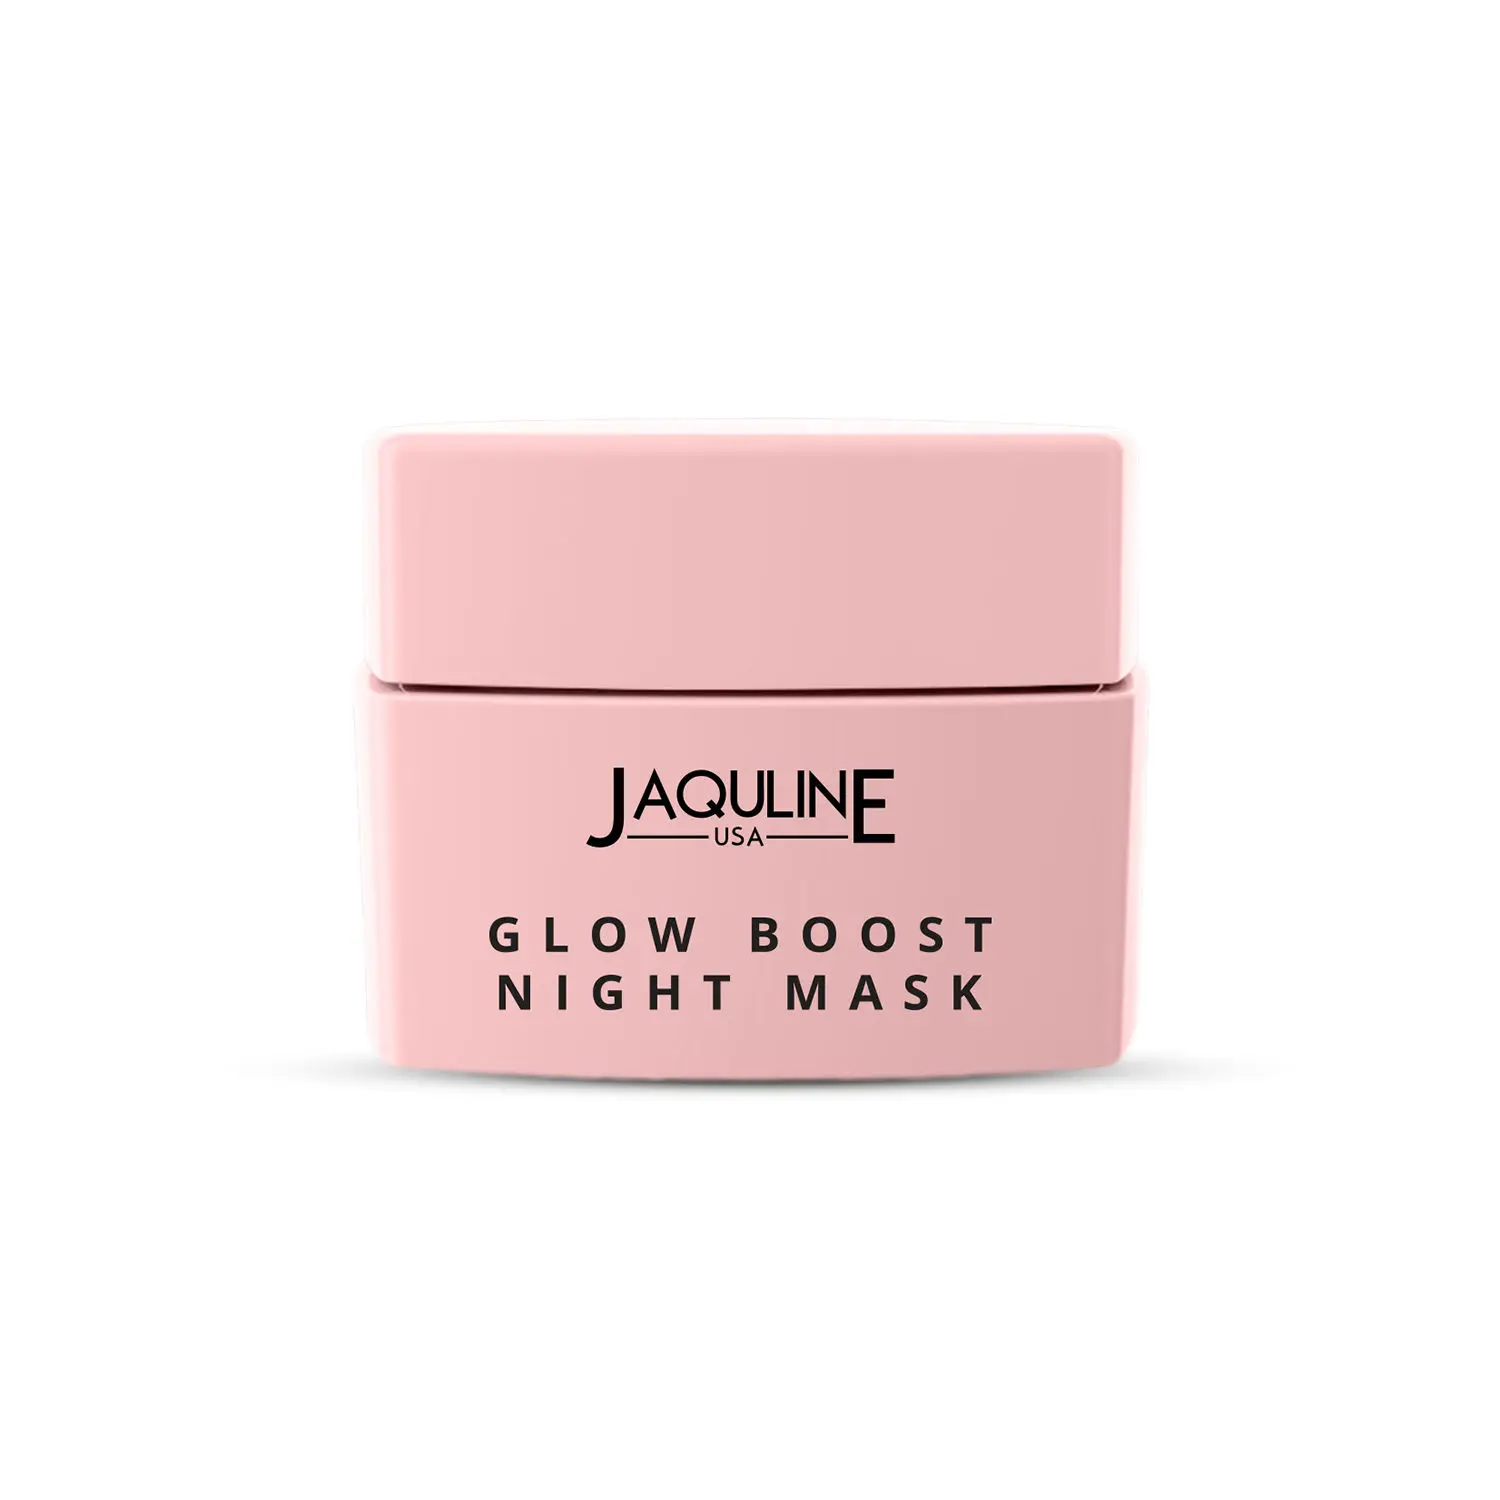 Jaquline USA Glow Boost Night Mask 50g